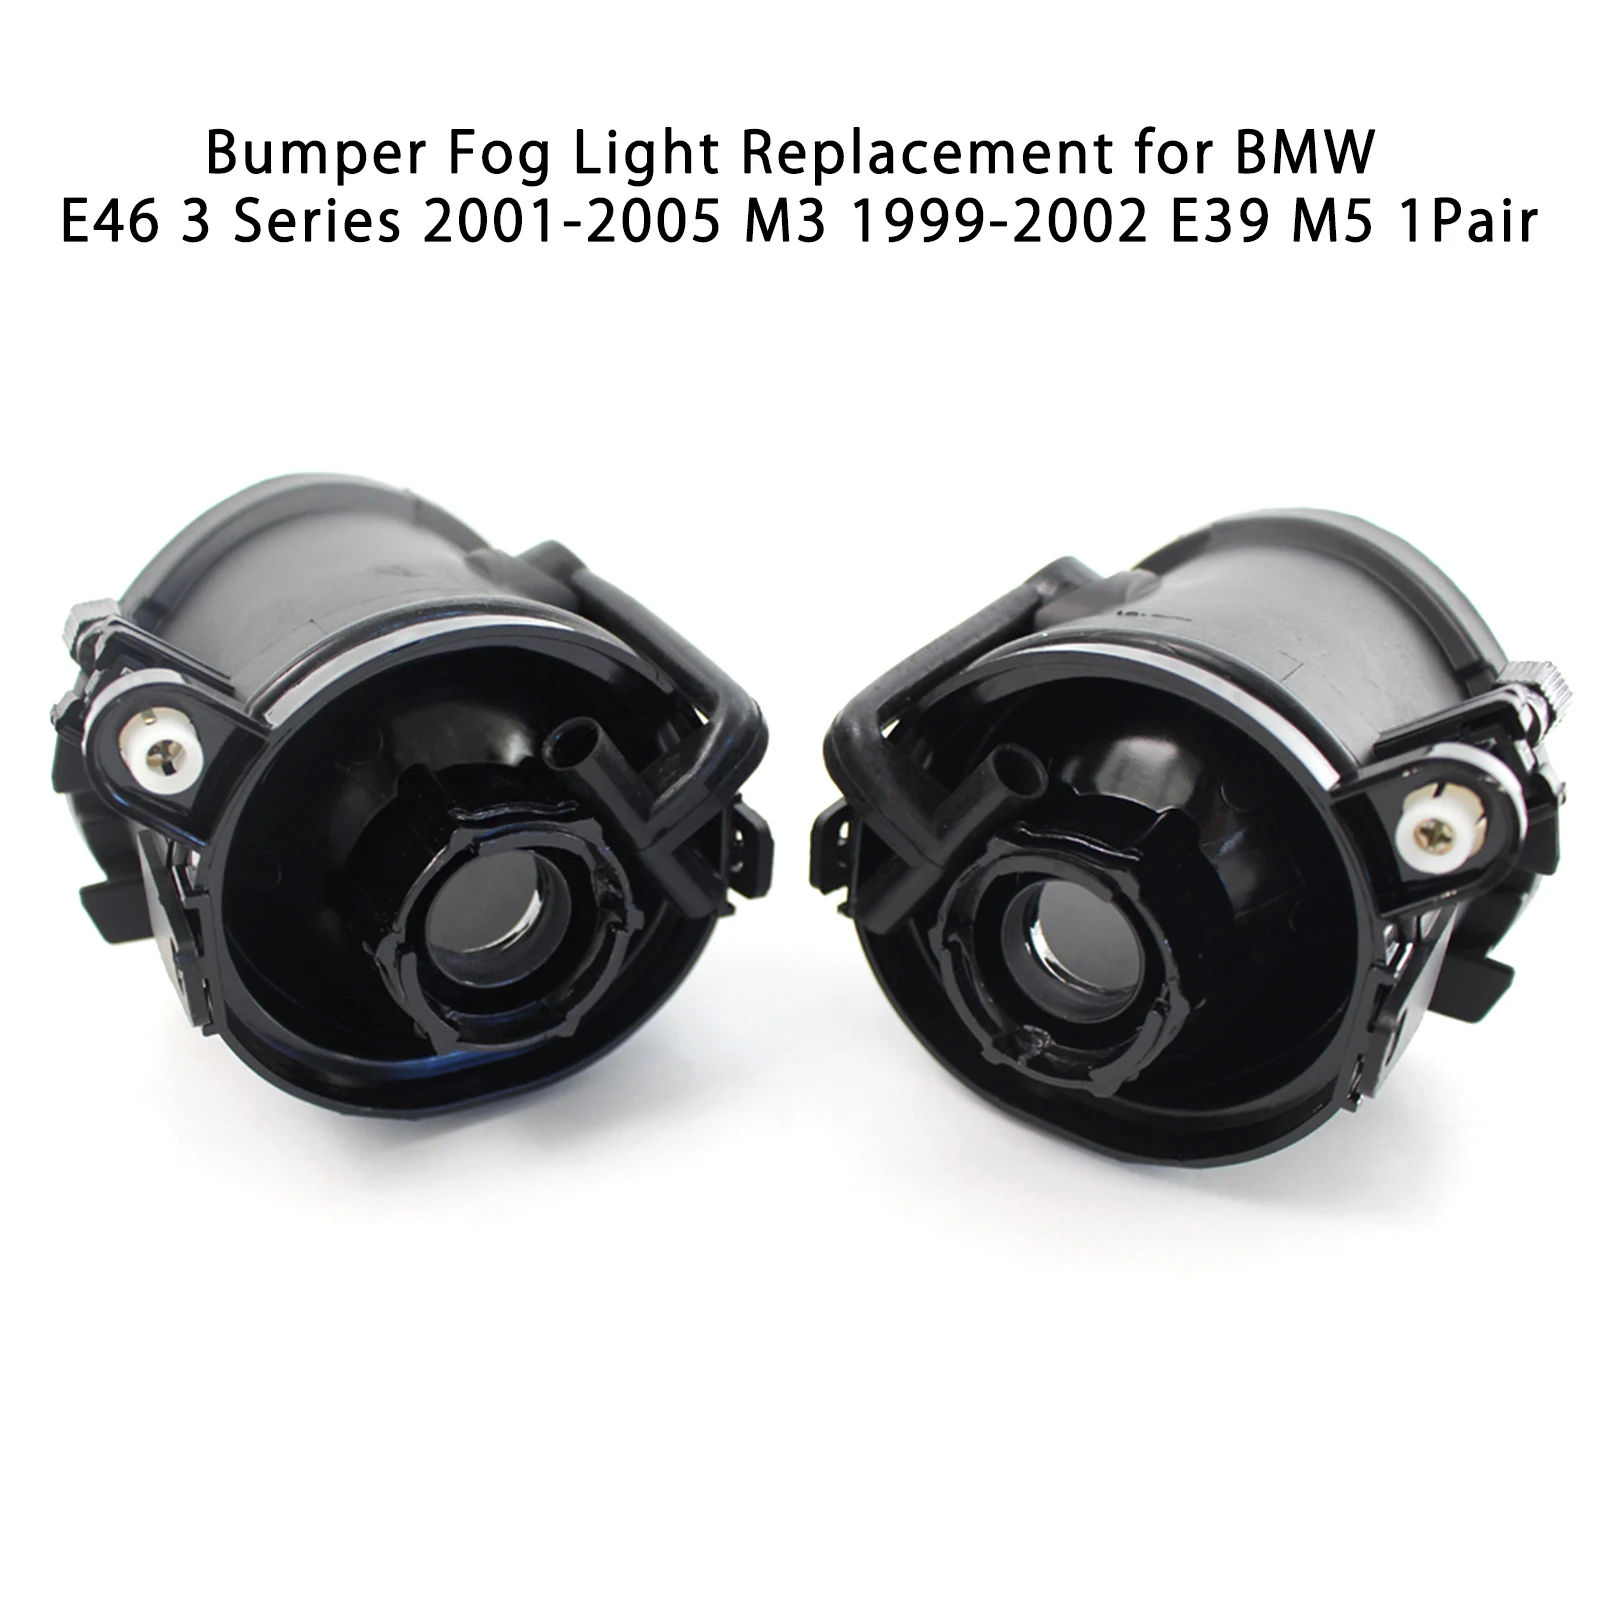 

Противотуманные фары для бампера, сменные фары для BM W E46 3 серии 2001-2005 M3 1999-2002 E39 M5, 1 пара (без лампочек)